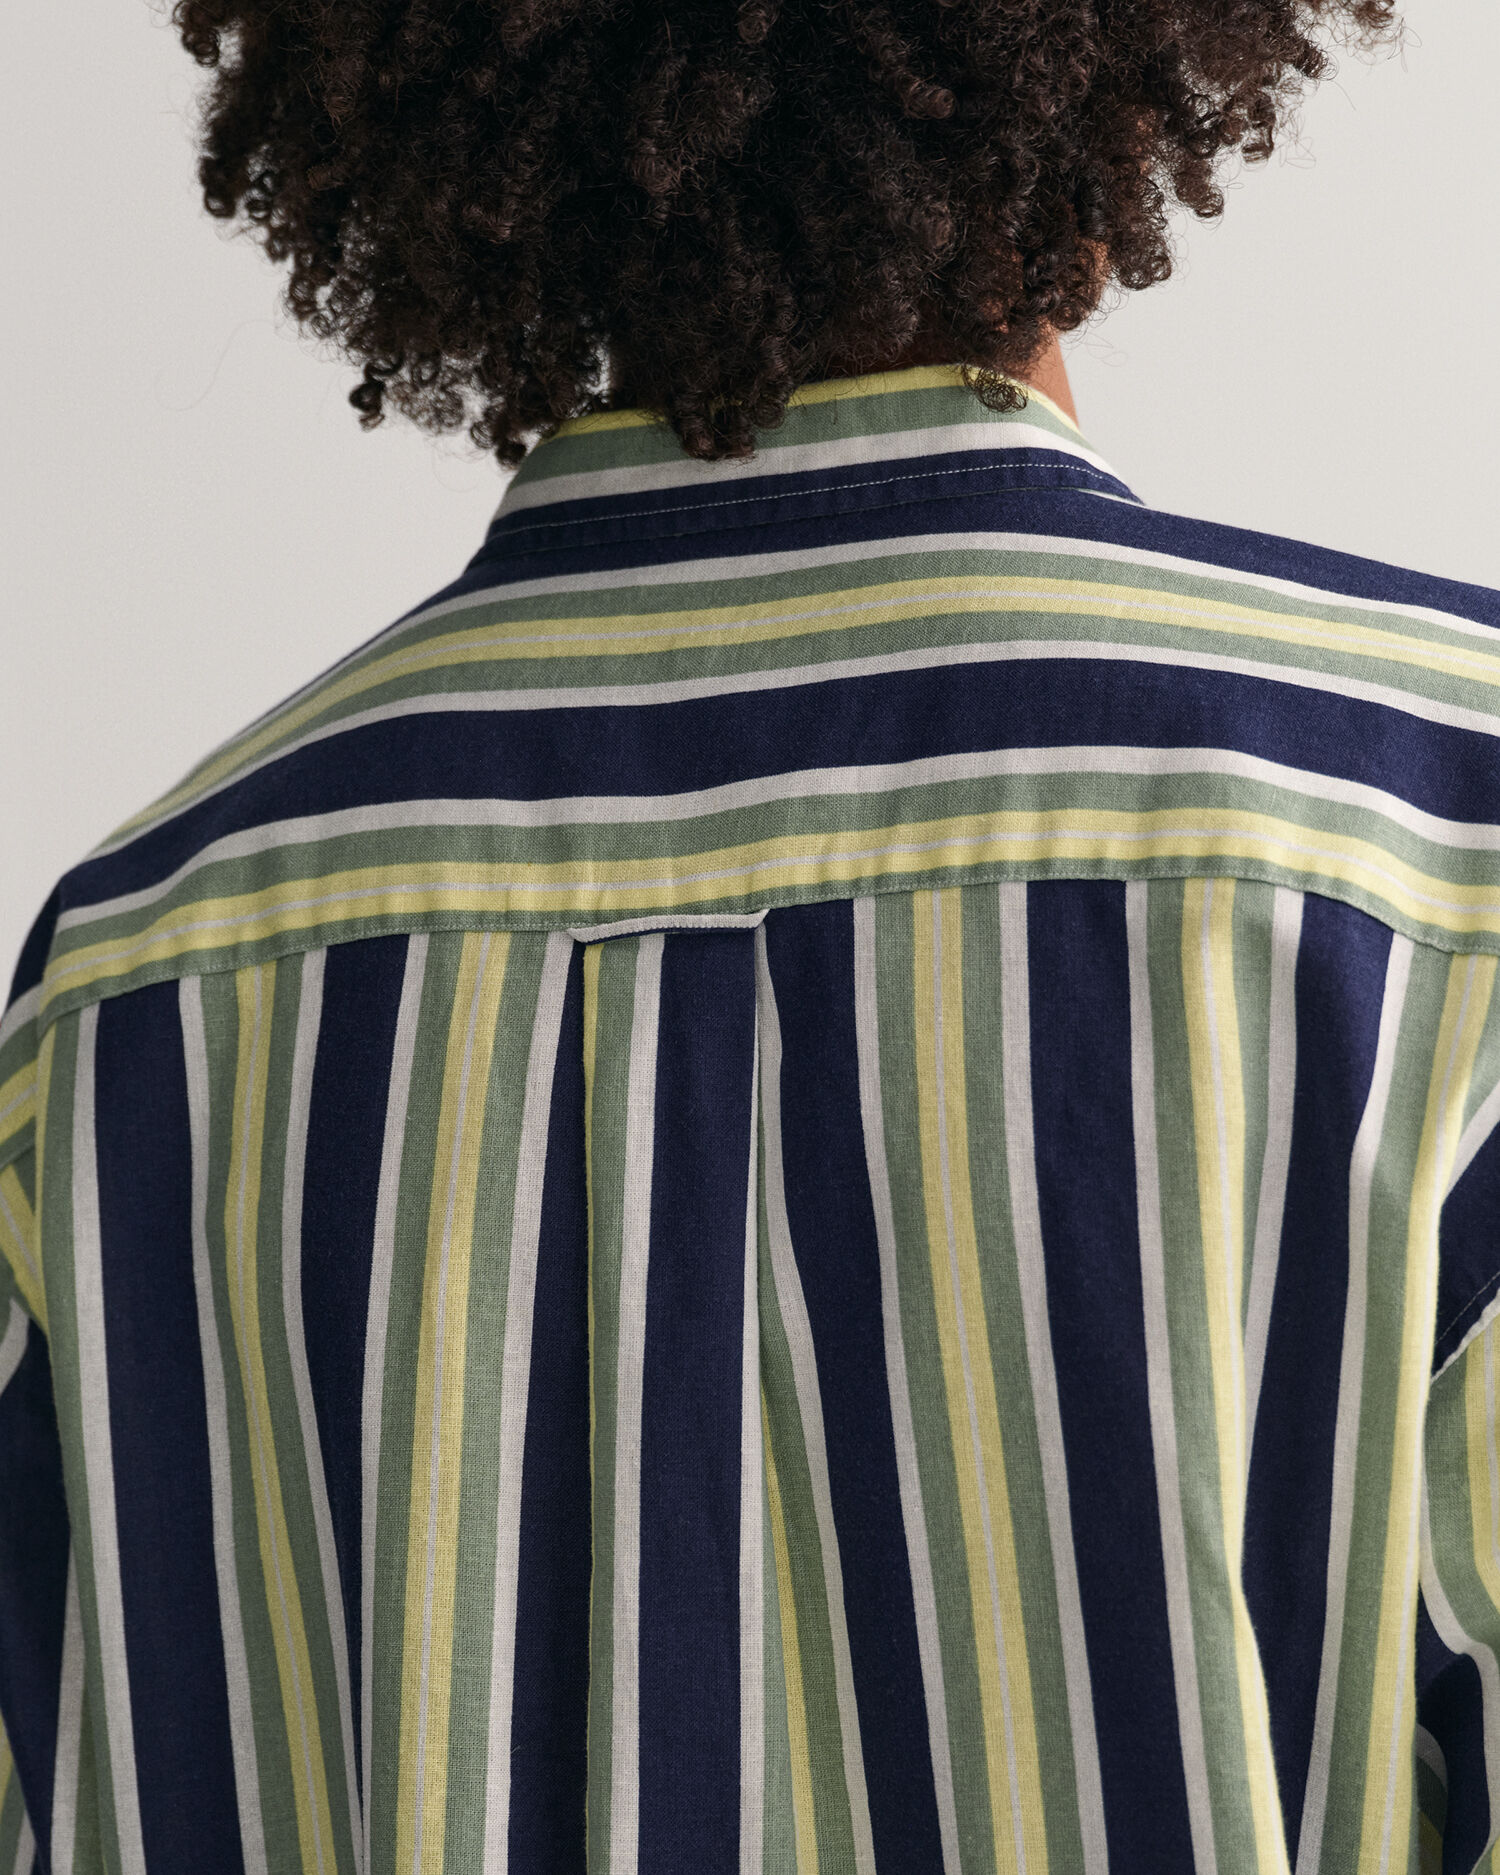 Relaxed Fit Striped Cotton Linen Short Sleeve Shirt - GANT